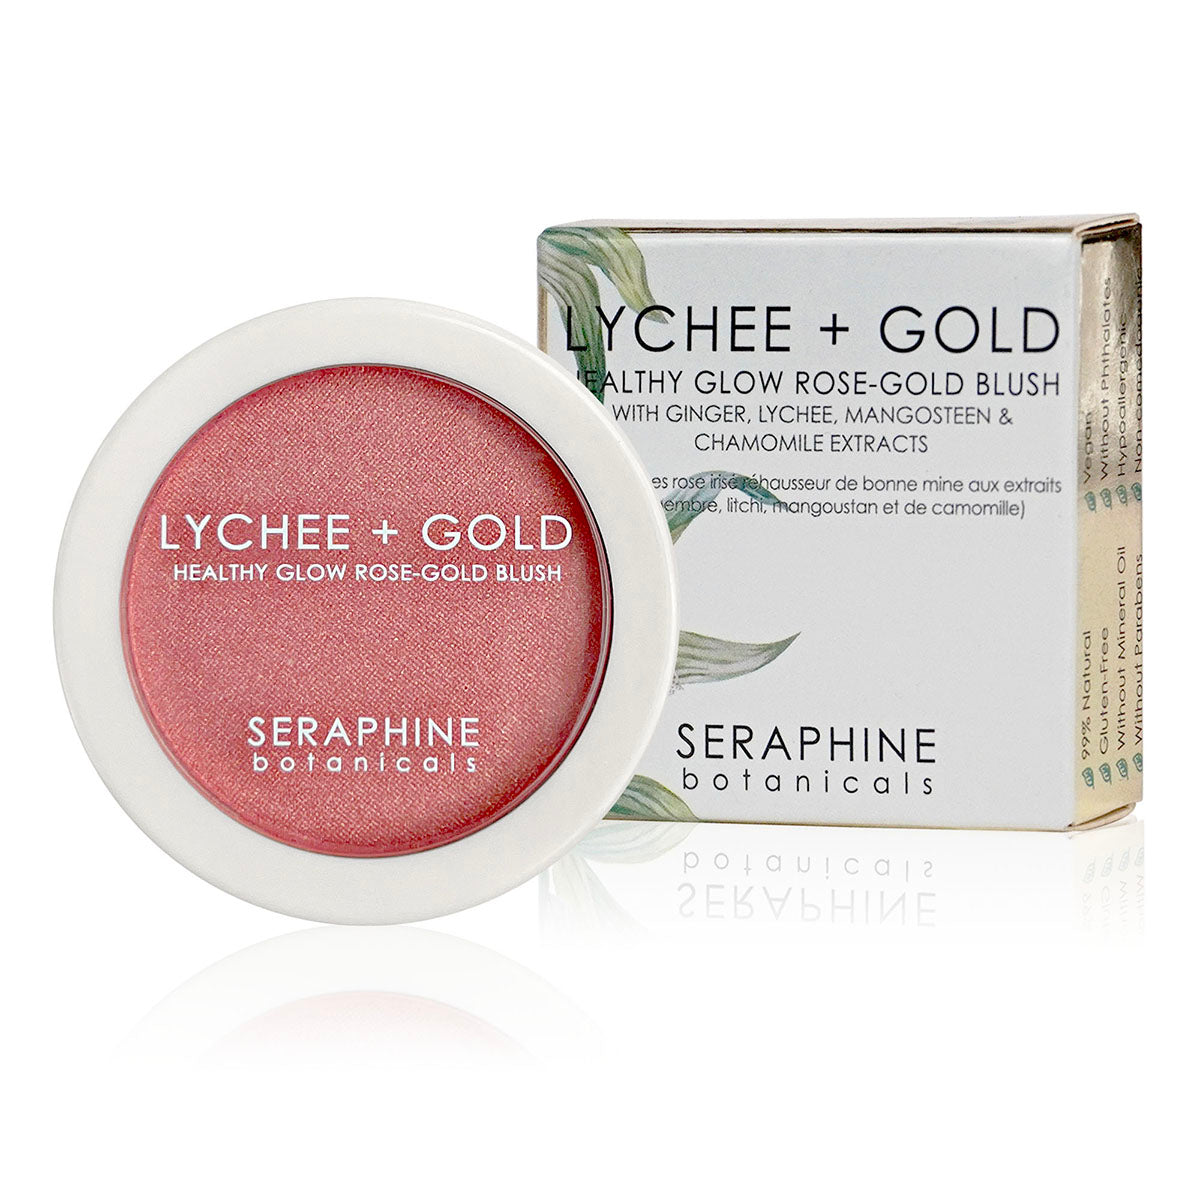 Lychee + Gold - Healthy Glow Rose-Gold Blush – Seraphine Botanicals